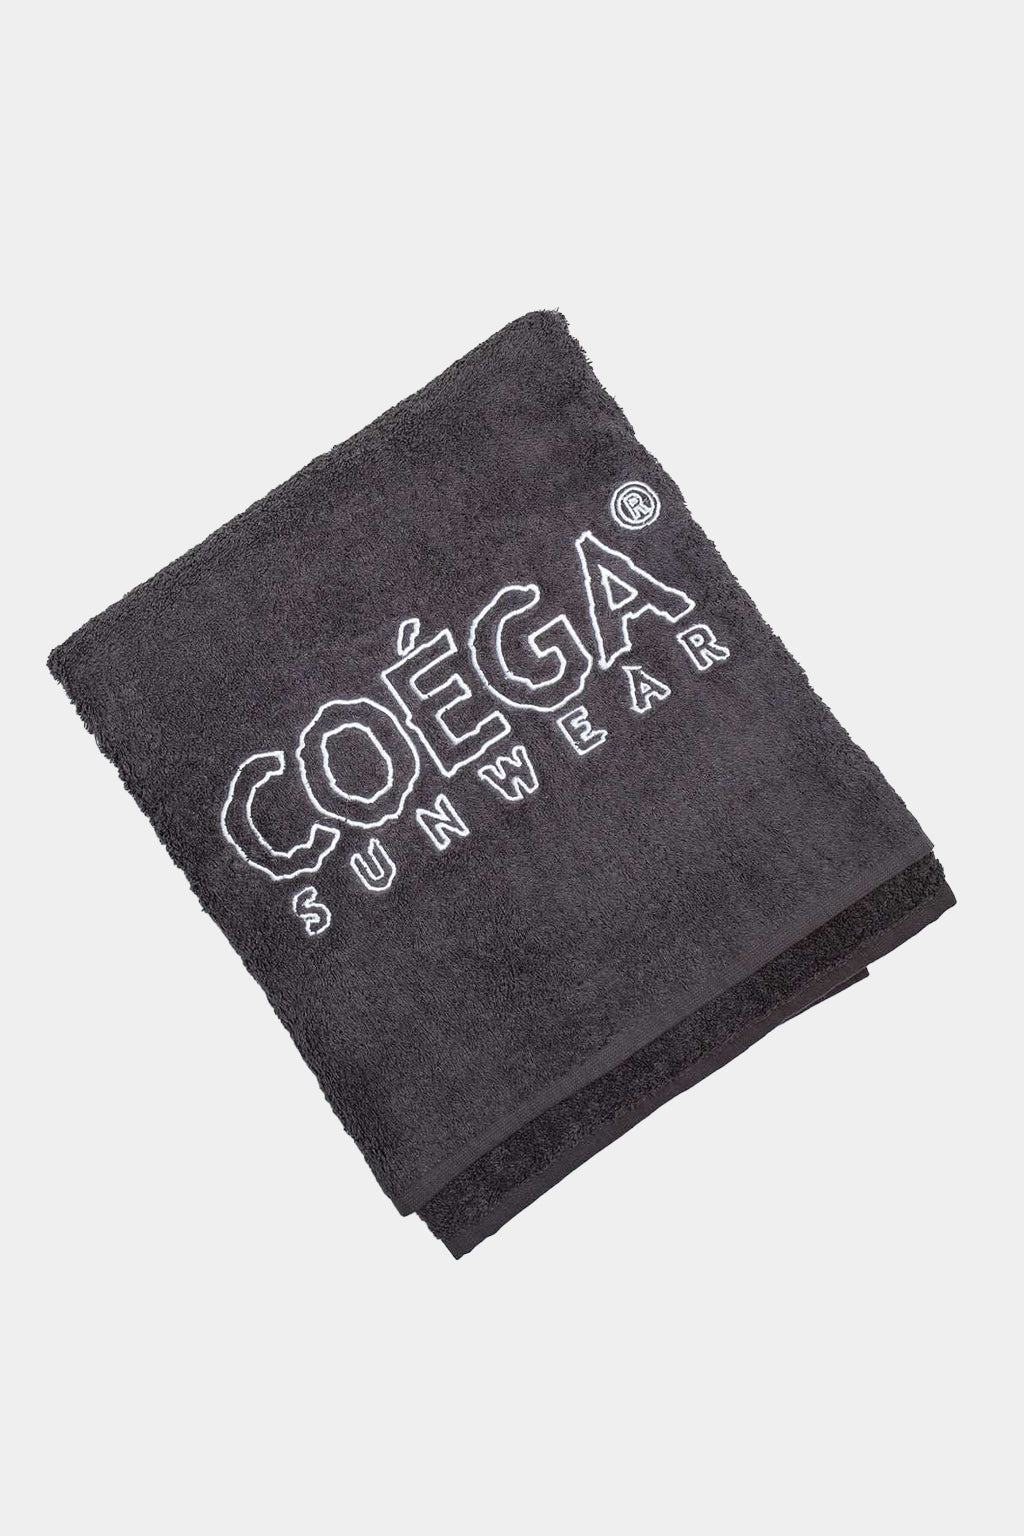 Coega - Beach Towel